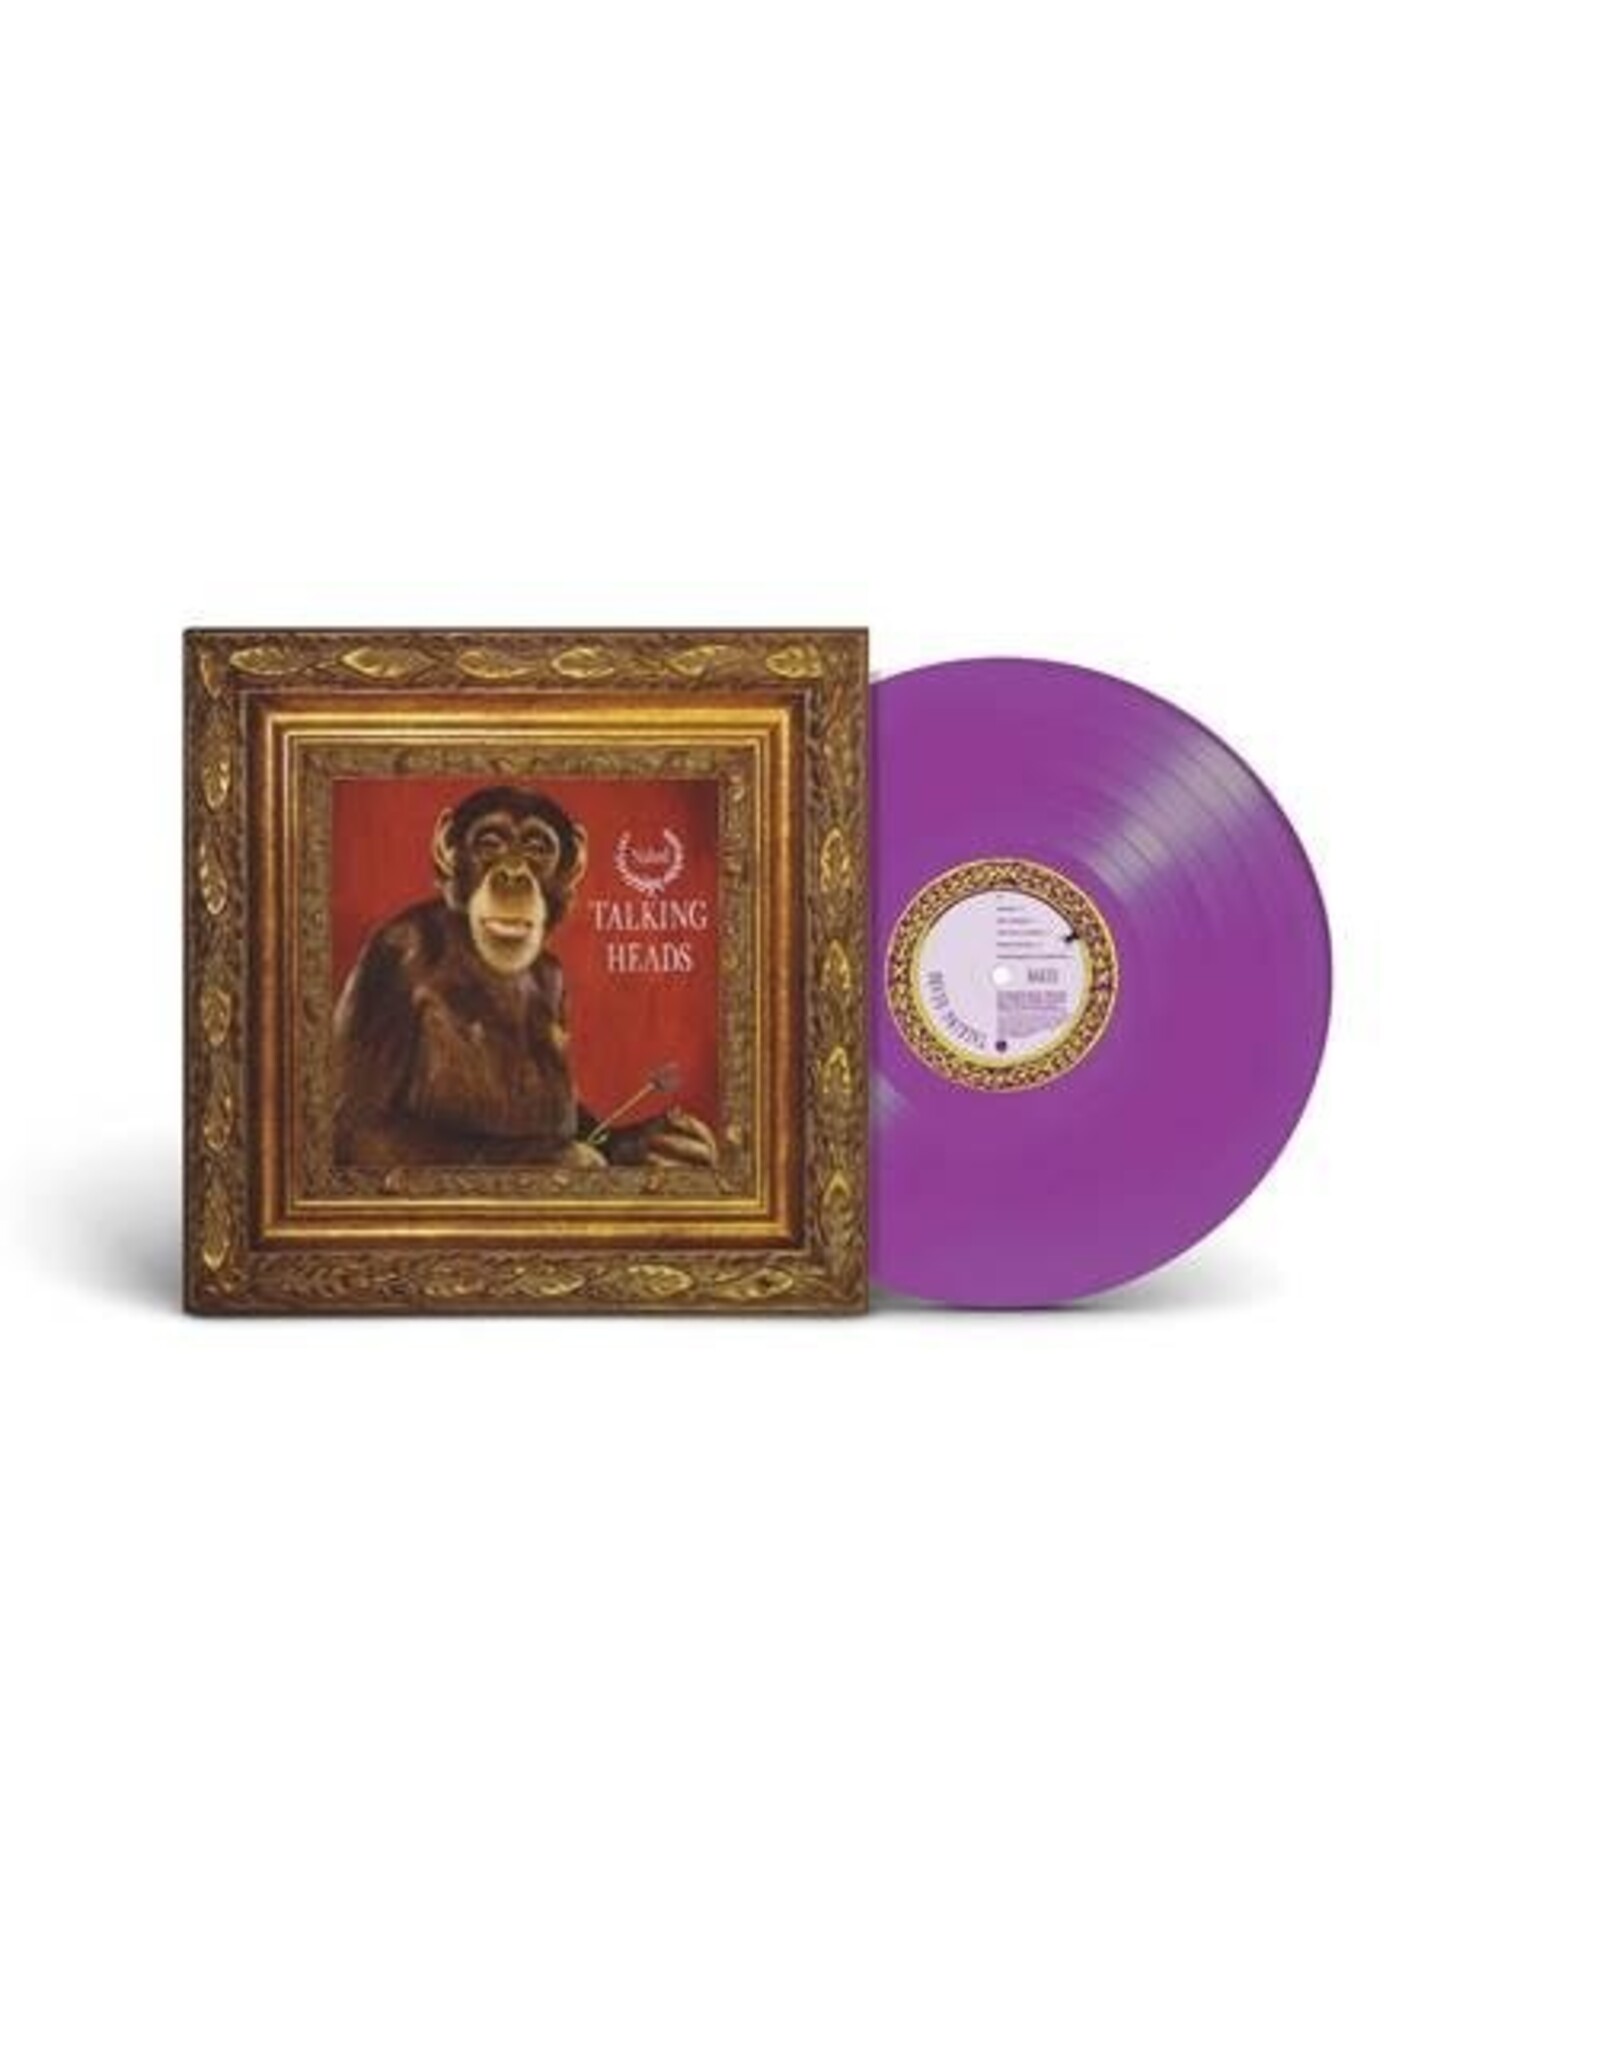 Talking Heads - Naked (Exclusive Violet Vinyl)